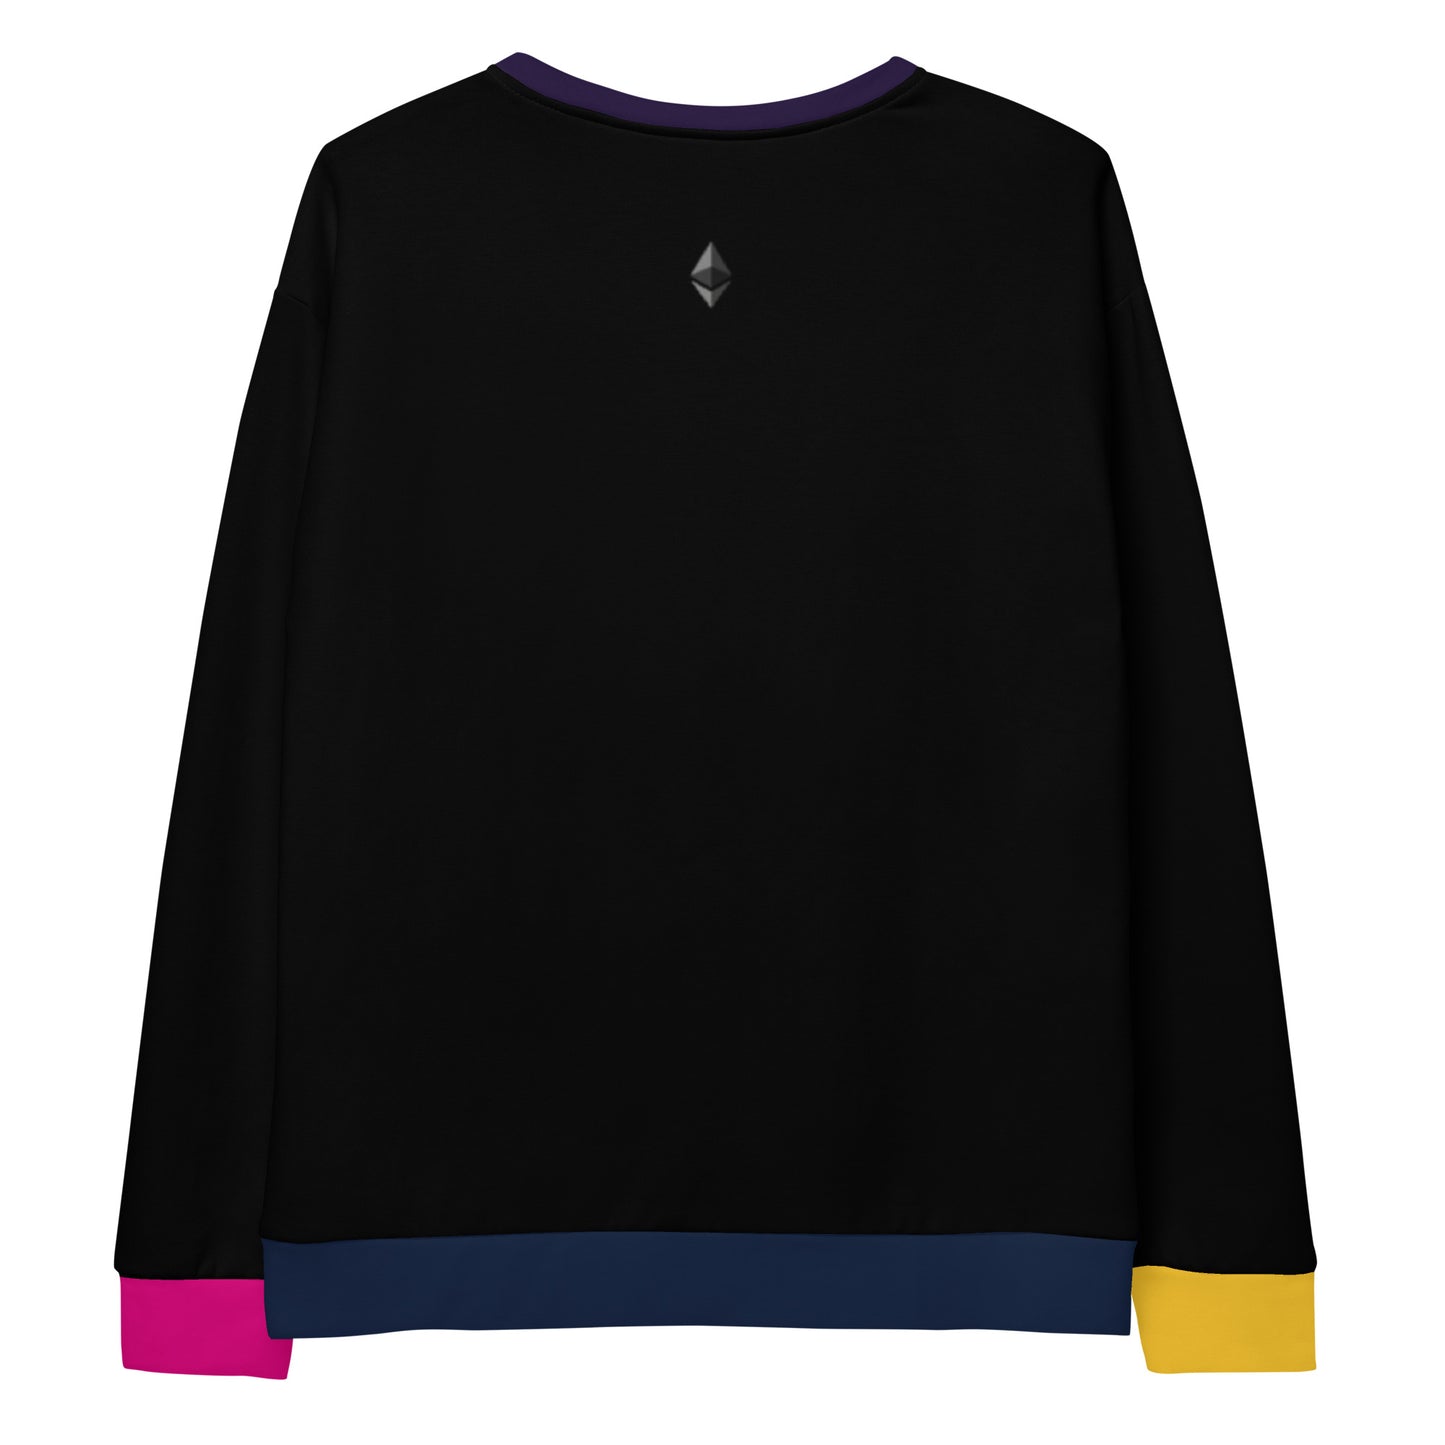 Ethereum Multicolors Sweatshirt